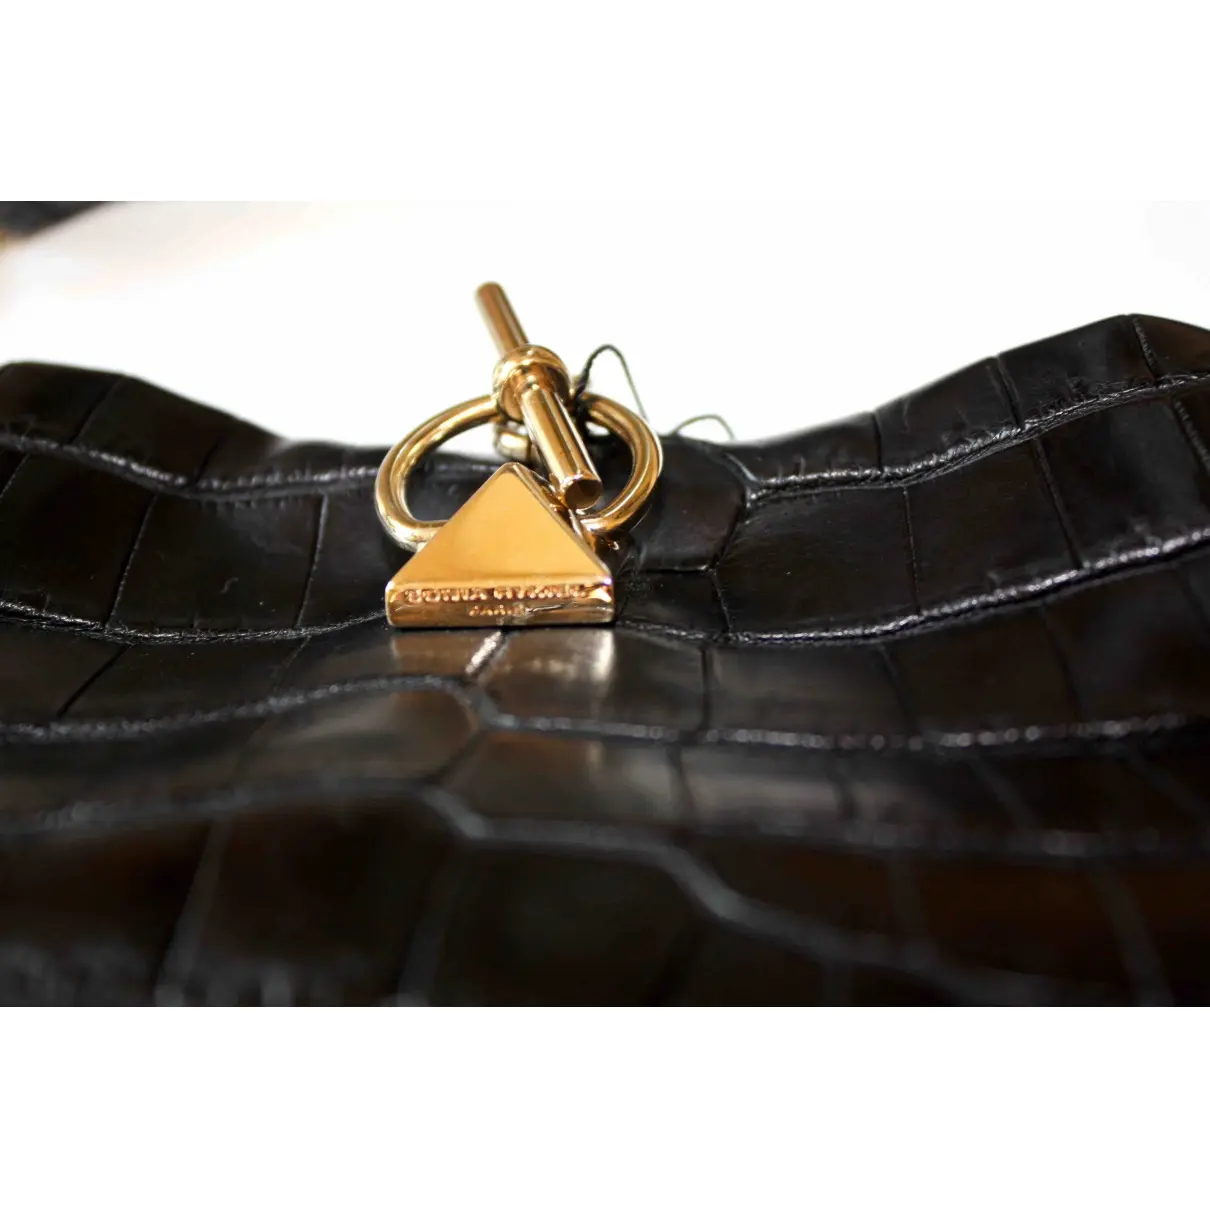 Buy Sonia Rykiel Domino exotic leathers handbag online - Vintage